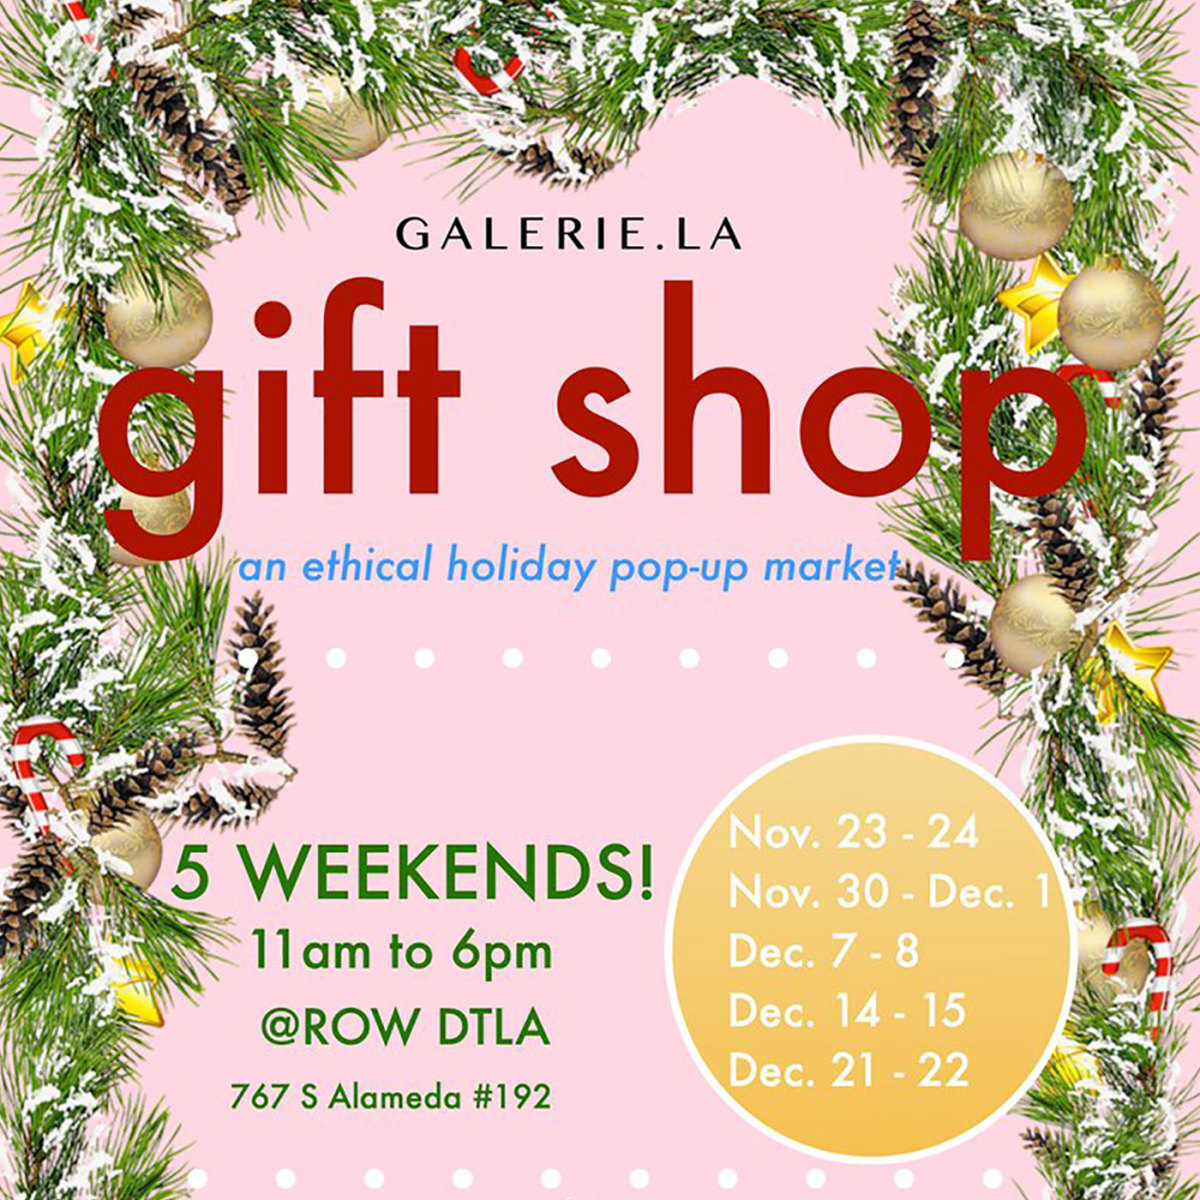 GALERIE.LA Gift Shop flyer